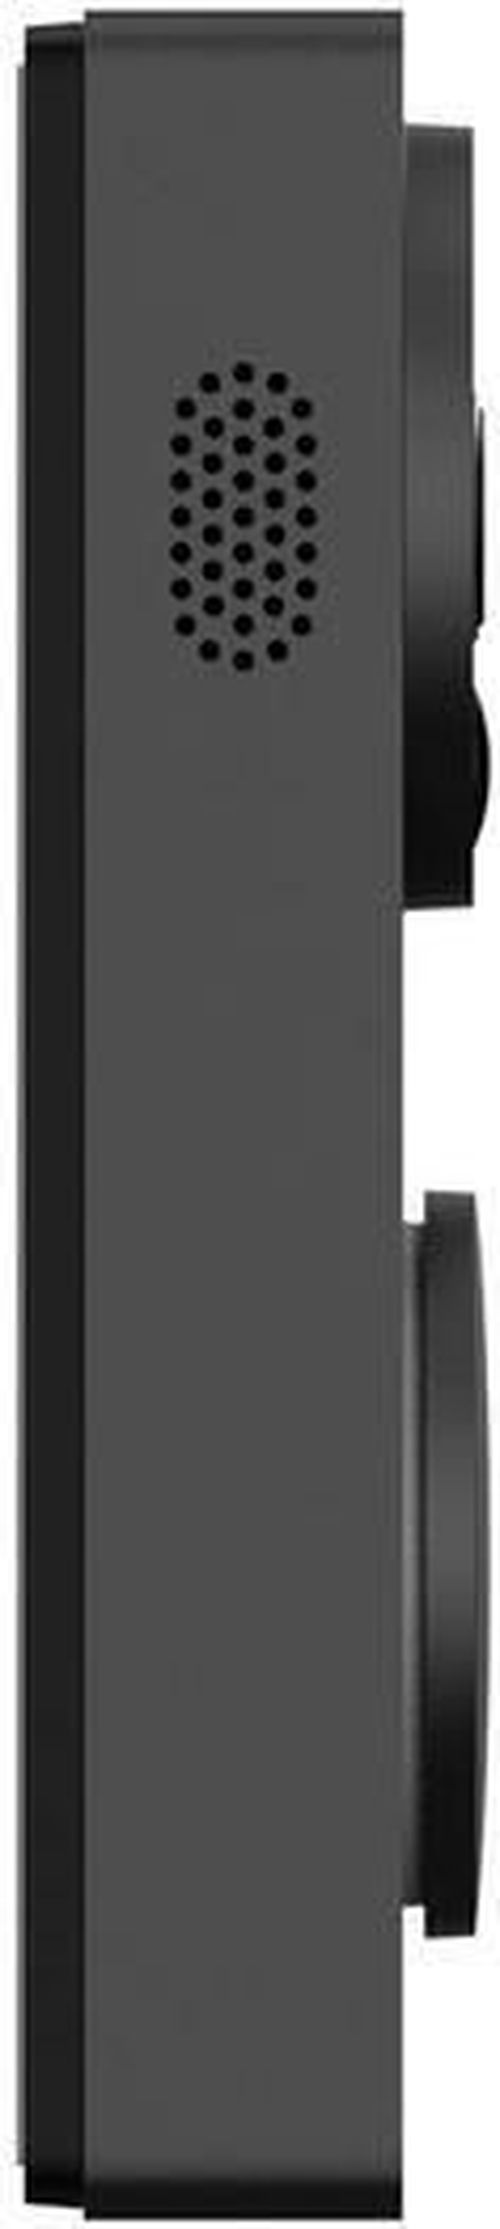 купить Видеодомофон Aqara by Xiaomi ZNKSML01LM Black G4 в Кишинёве 